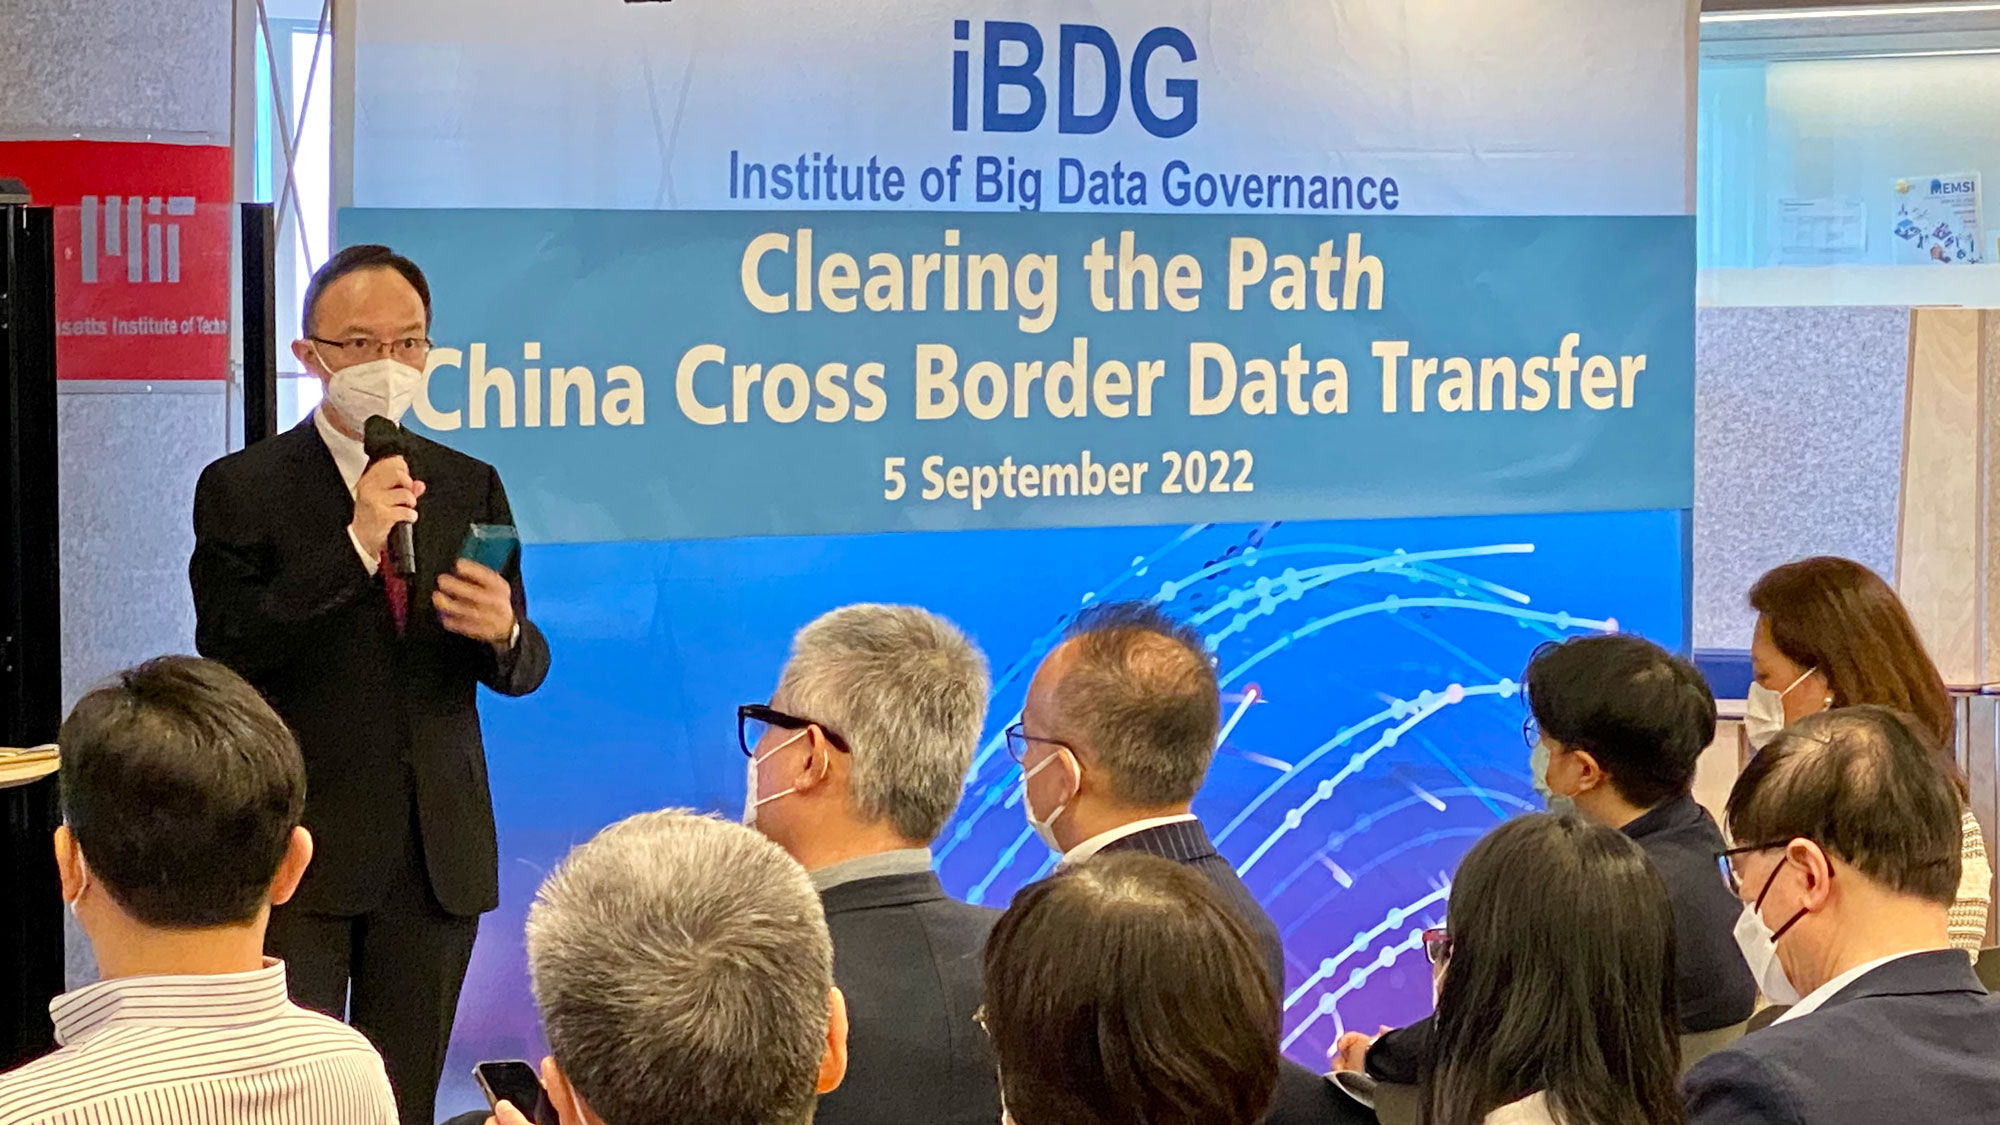 政府资讯科技总监林伟乔先生于「iBDG Seminar: Clearing the Path China Cross Border Data Transfer」致辞。